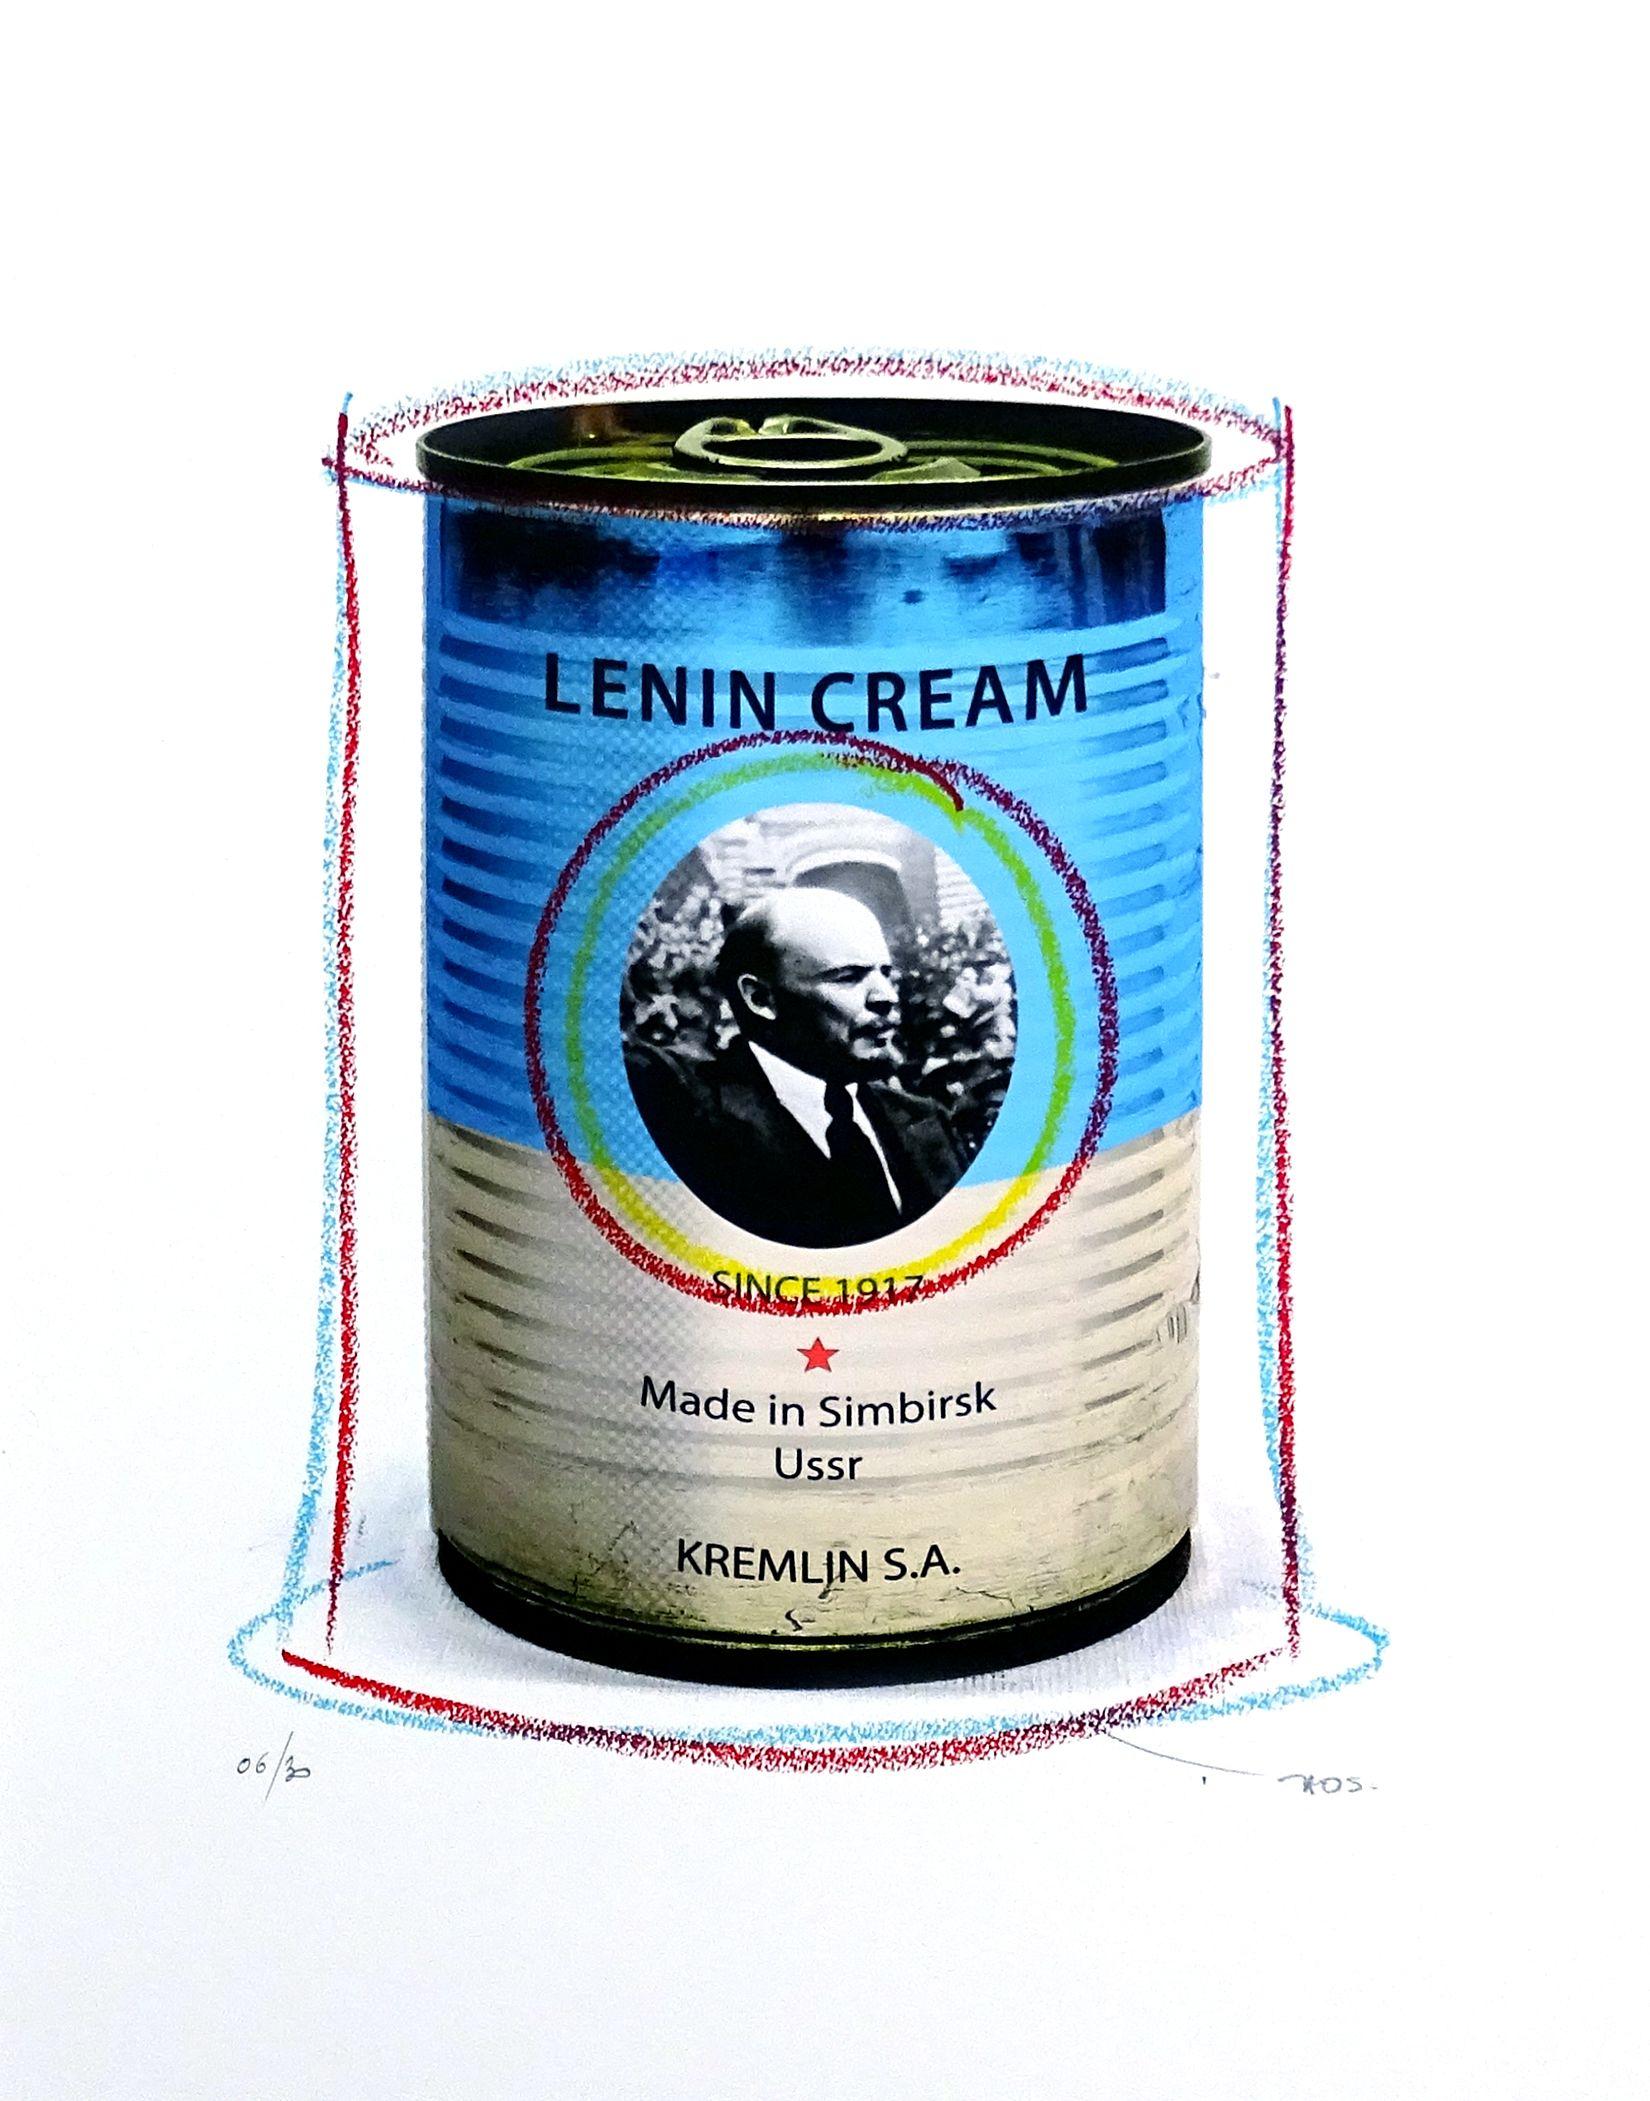 Tehos Lenin cream, Mixed Media on Paper - Mixed Media Art by Tehos Frederic Camilleri